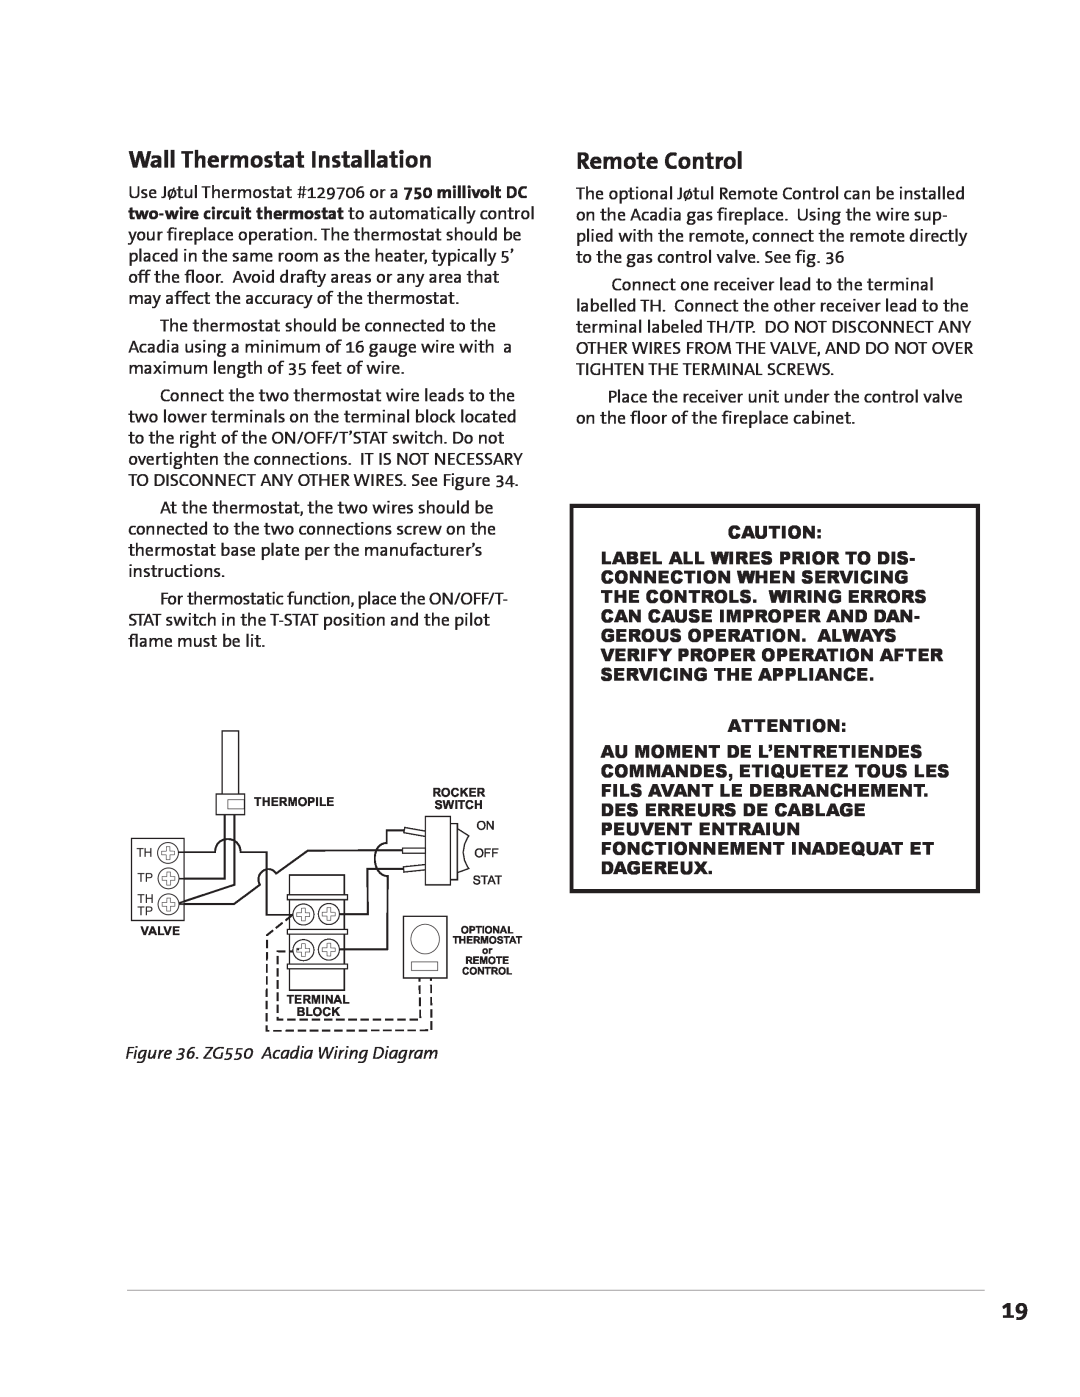 Jotul GZ 550 DV II manual Wall Thermostat Installation, Remote Control, ZG550 Acadia Wiring Diagram 